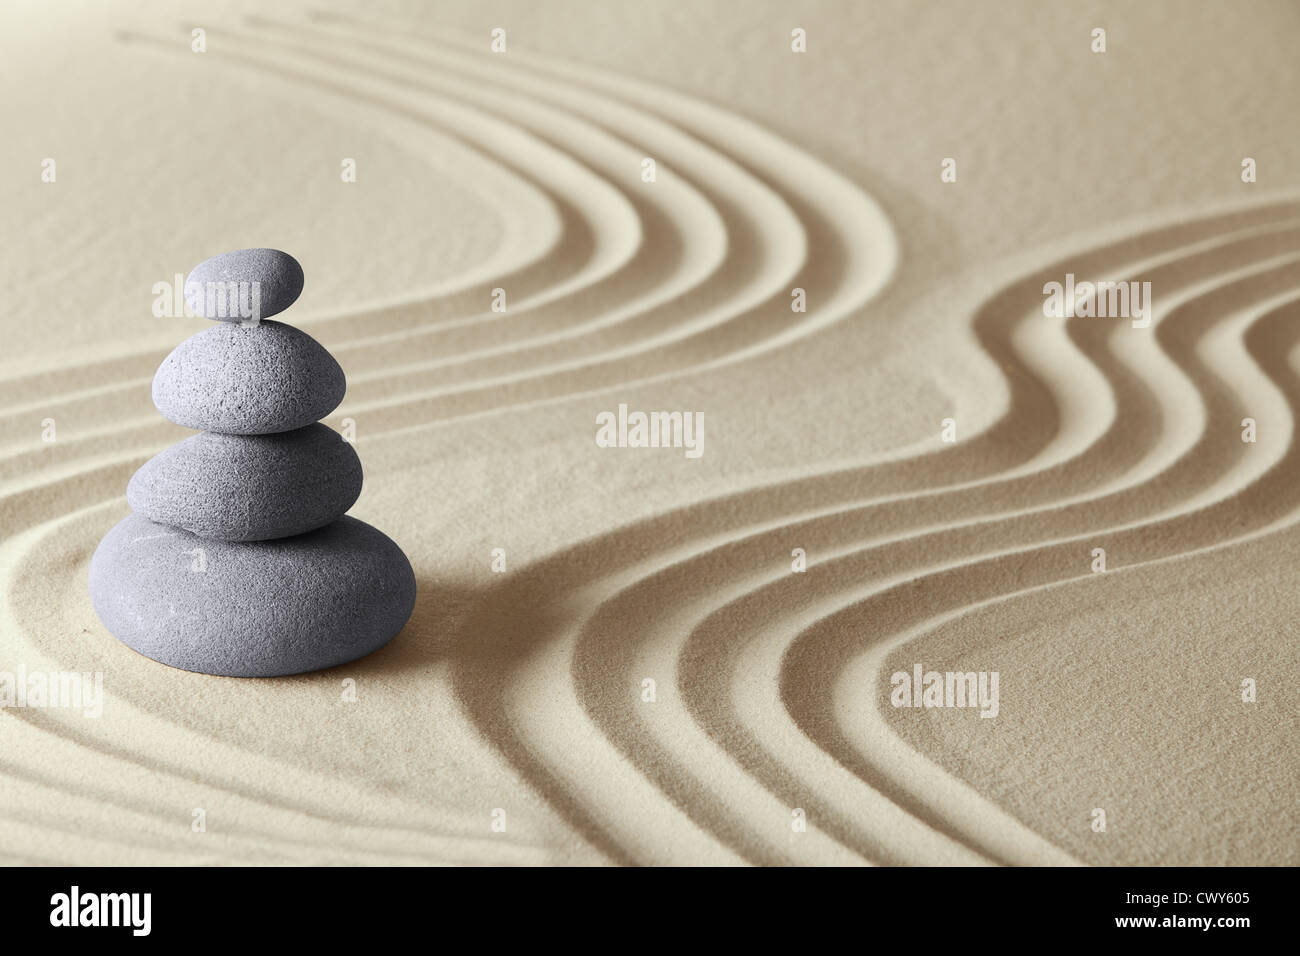 japanese zen garden meditation stone concept for balance harmony and relaxation Stock Photo